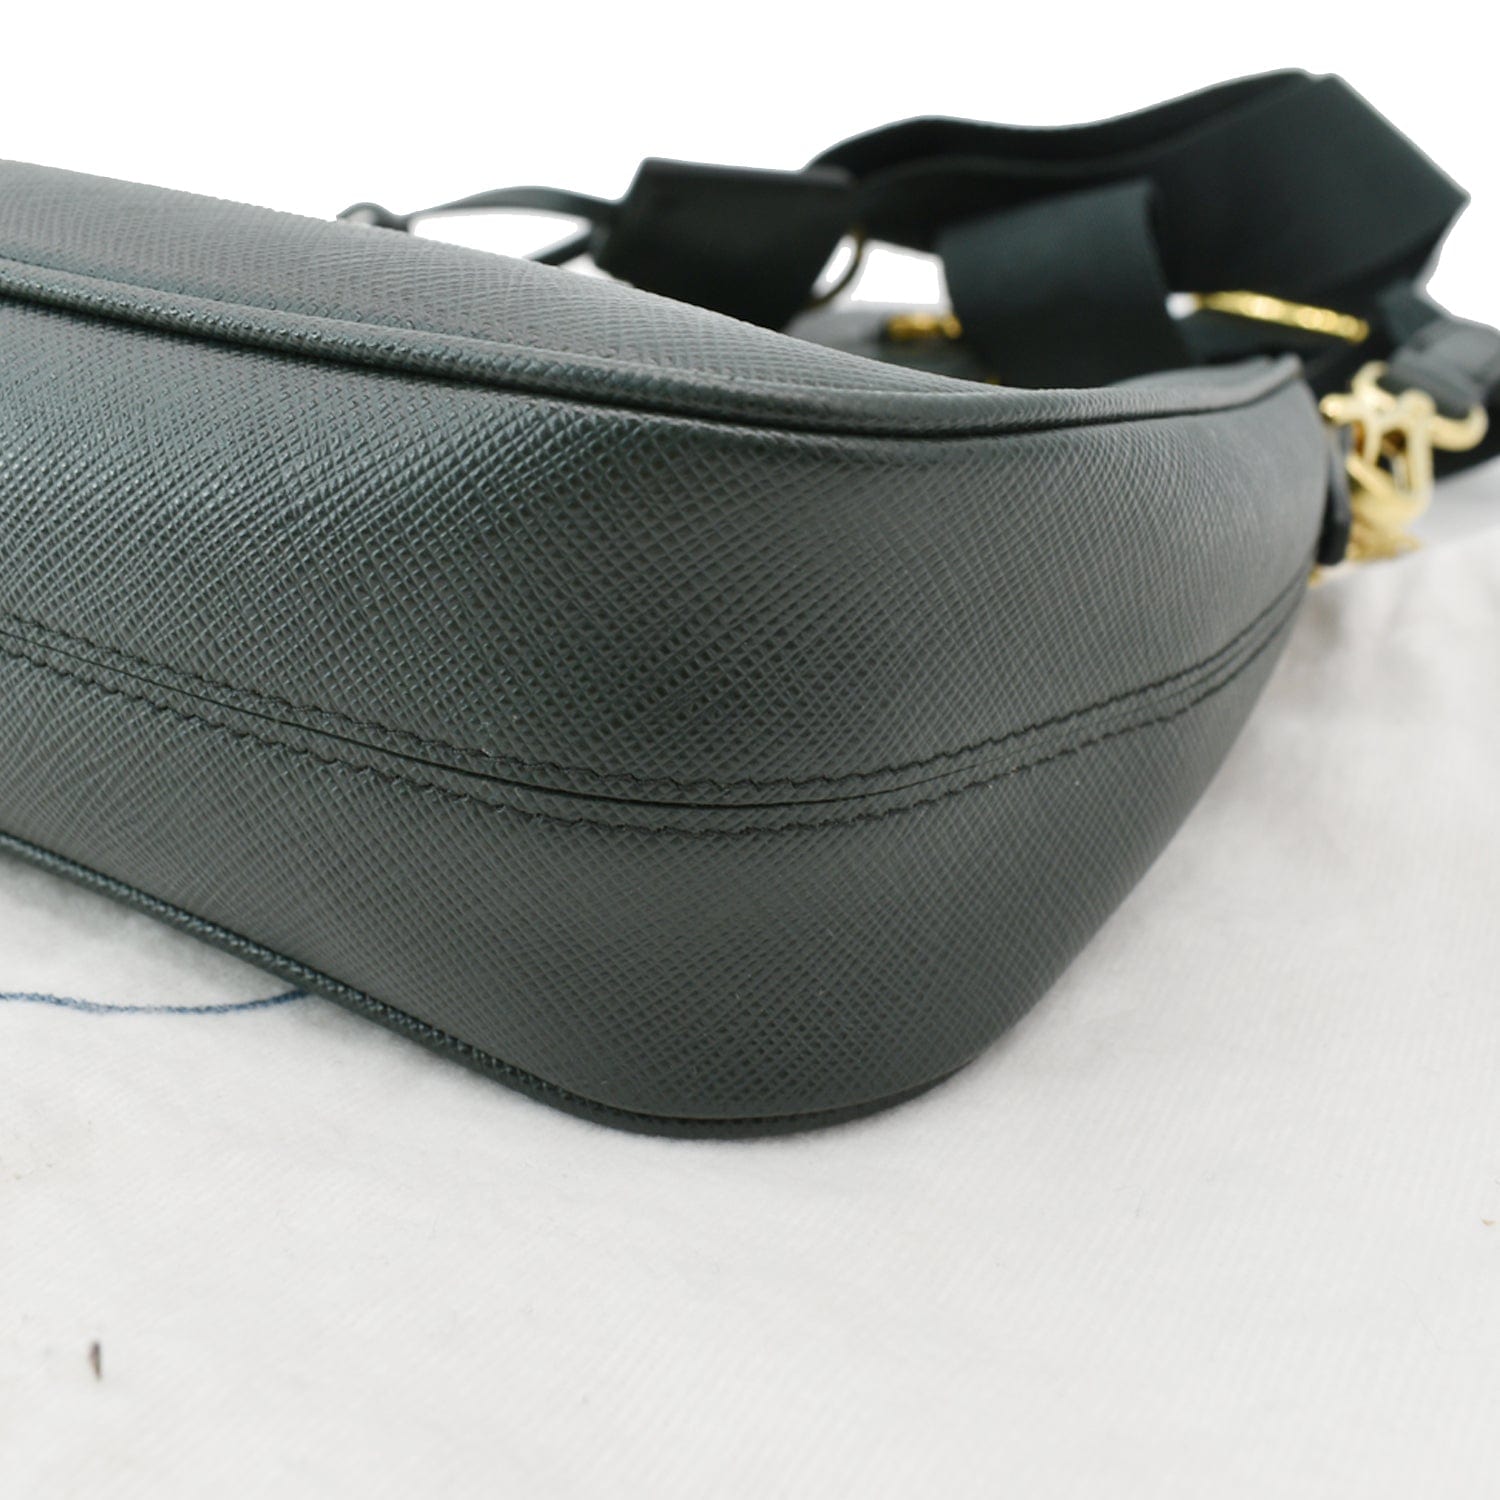 Promenade leather handbag Prada Green in Leather - 36314714